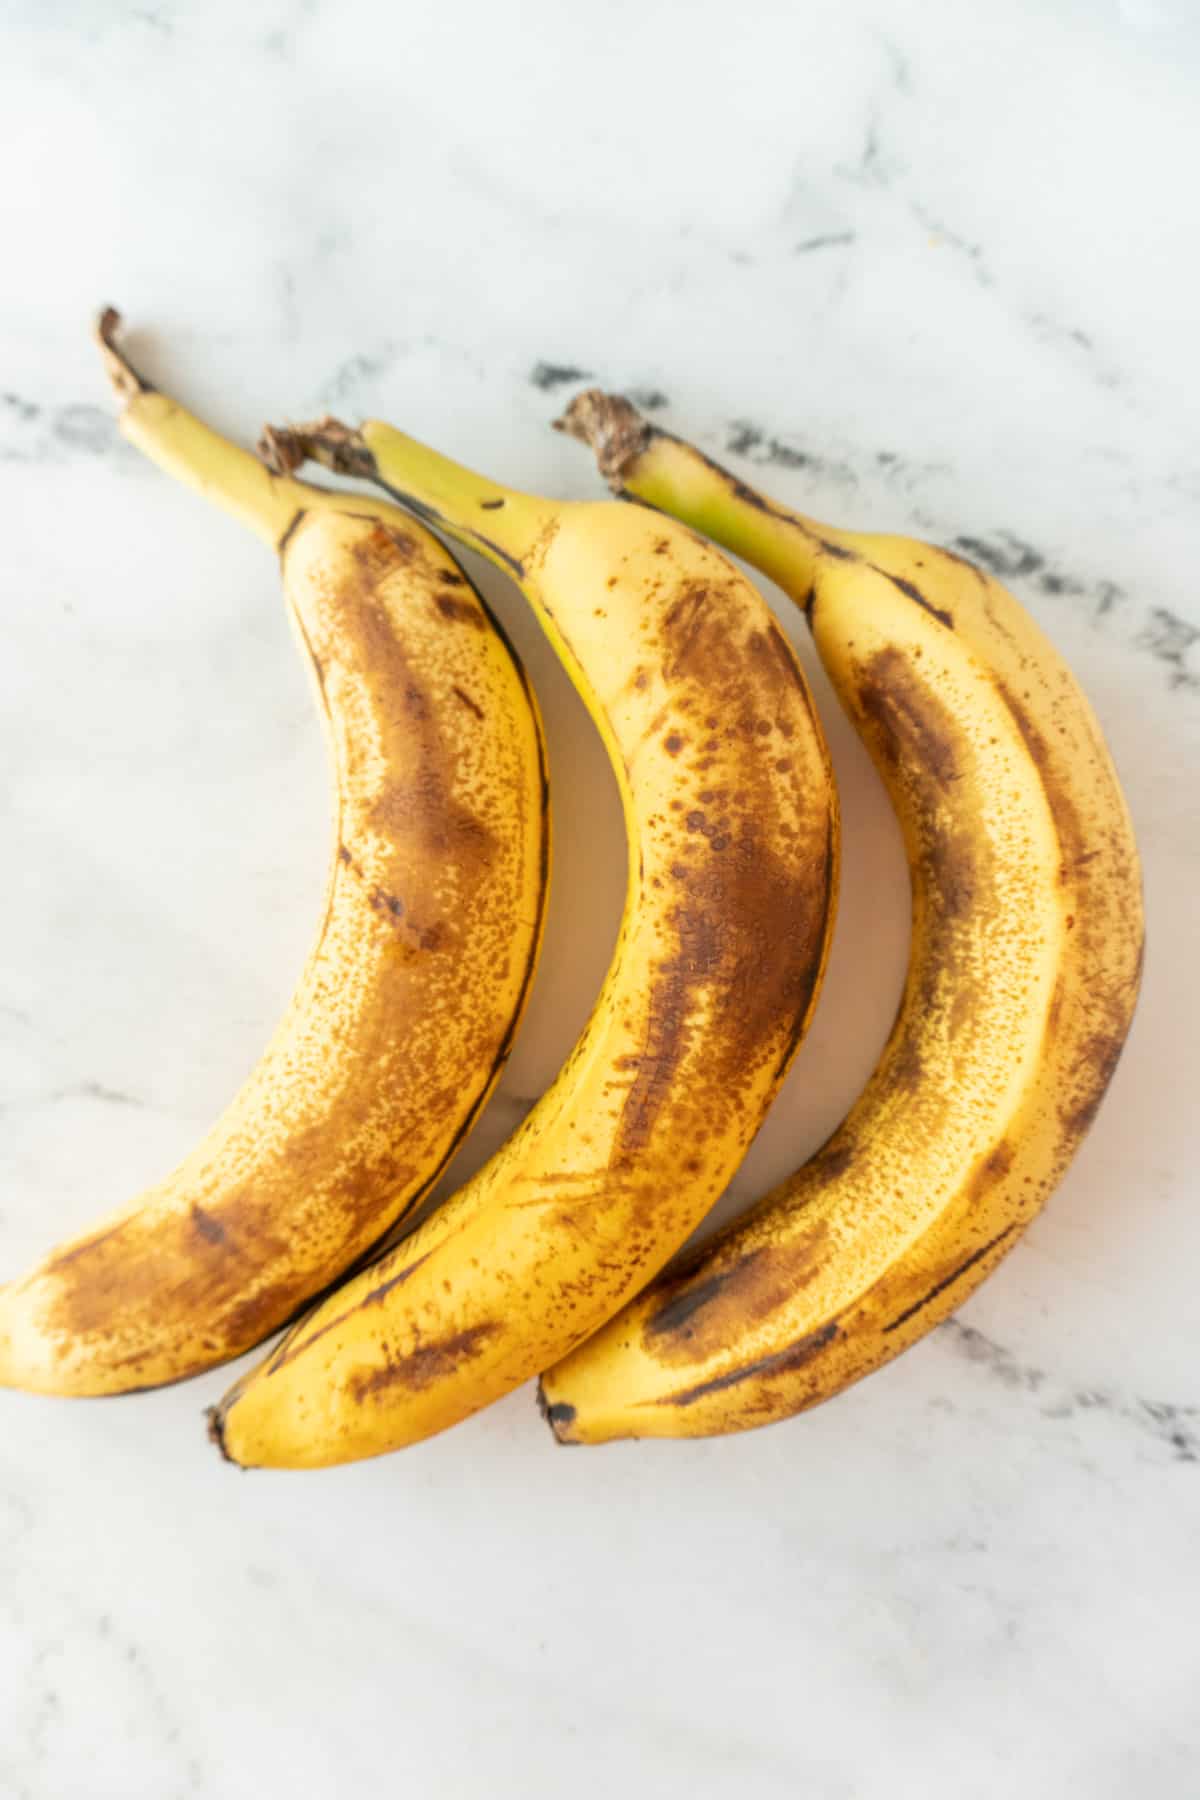 3 brown bananas with peel on